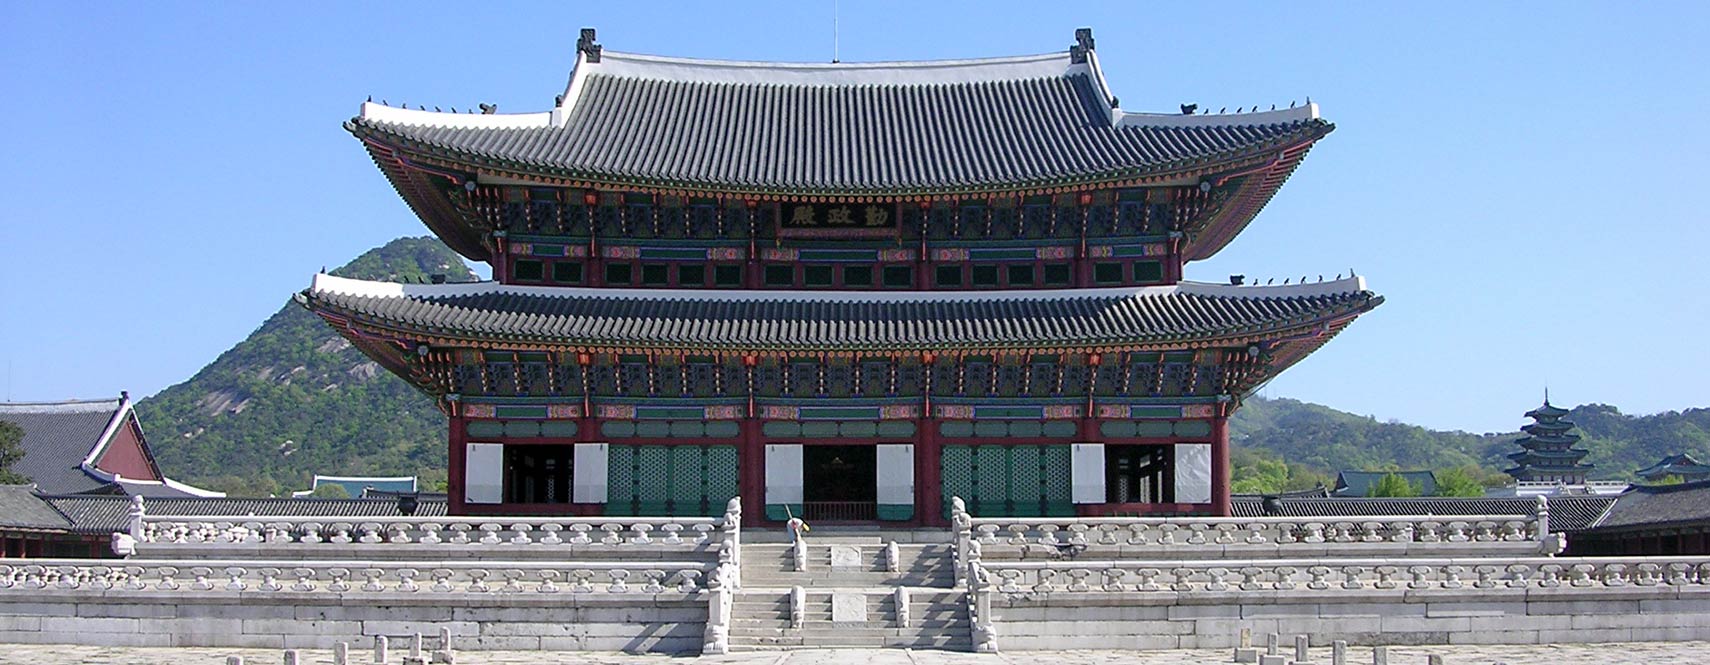 Gyeongbokgung royal palace in Seoul, South Korea